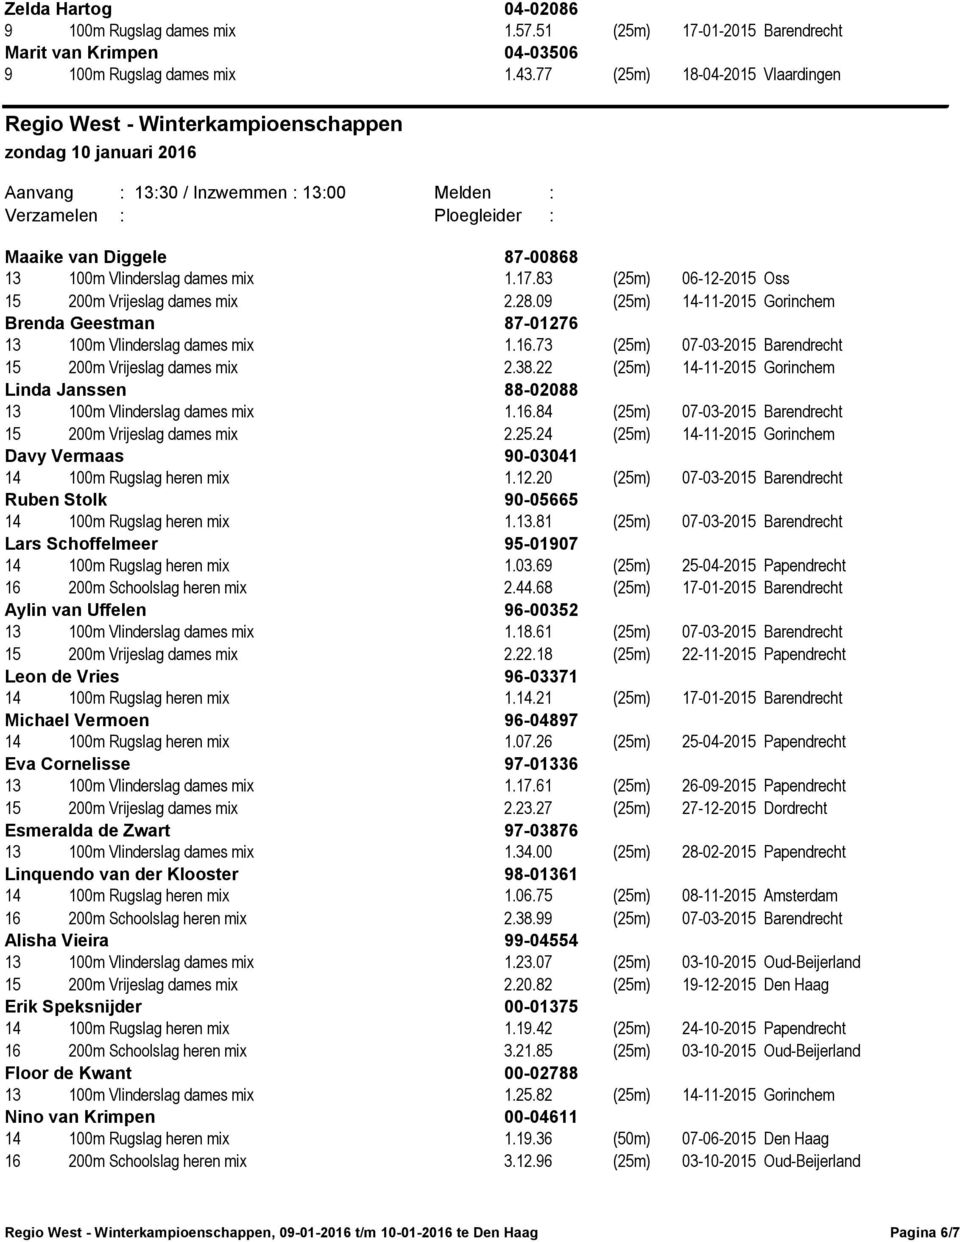 09 (25m) 14-11-2015 Gorinchem 13 100m Vlinderslag dames mix 1.16.73 (25m) 07-03-2015 Barendrecht 15 200m Vrijeslag dames mix 2.38.